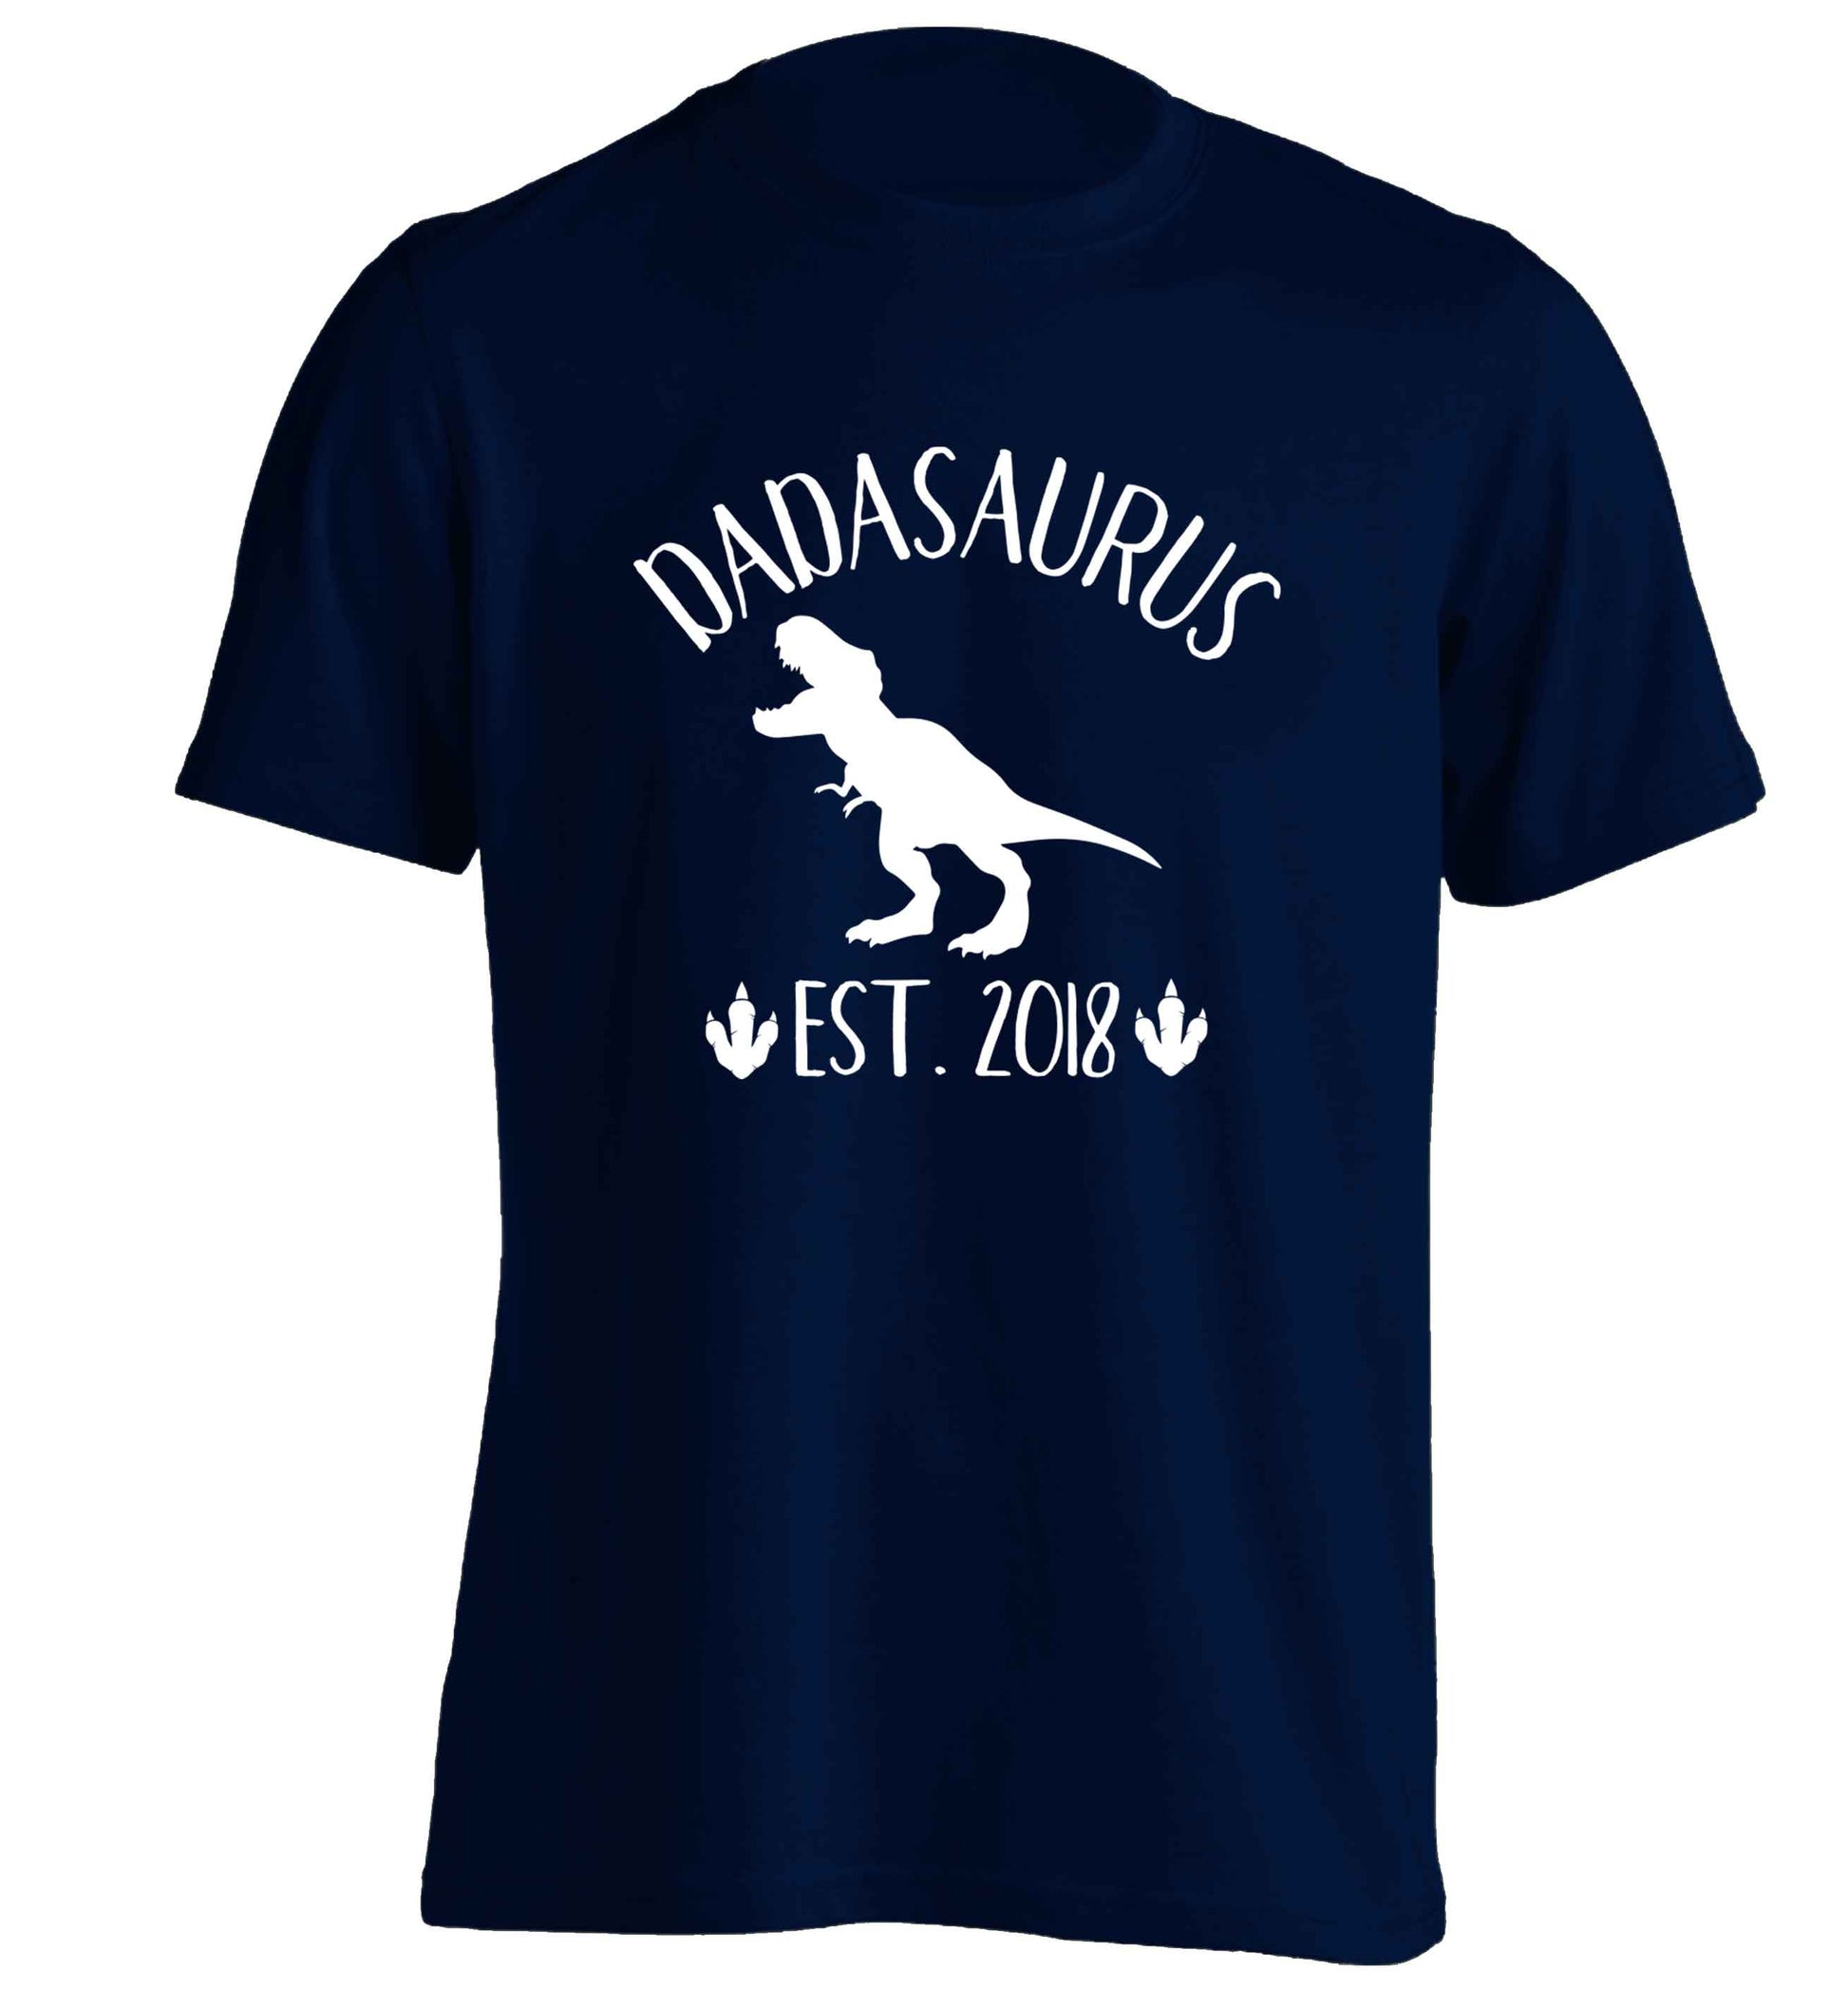 Personalised dadasaurus since (custom date) adults unisex navy Tshirt 2XL